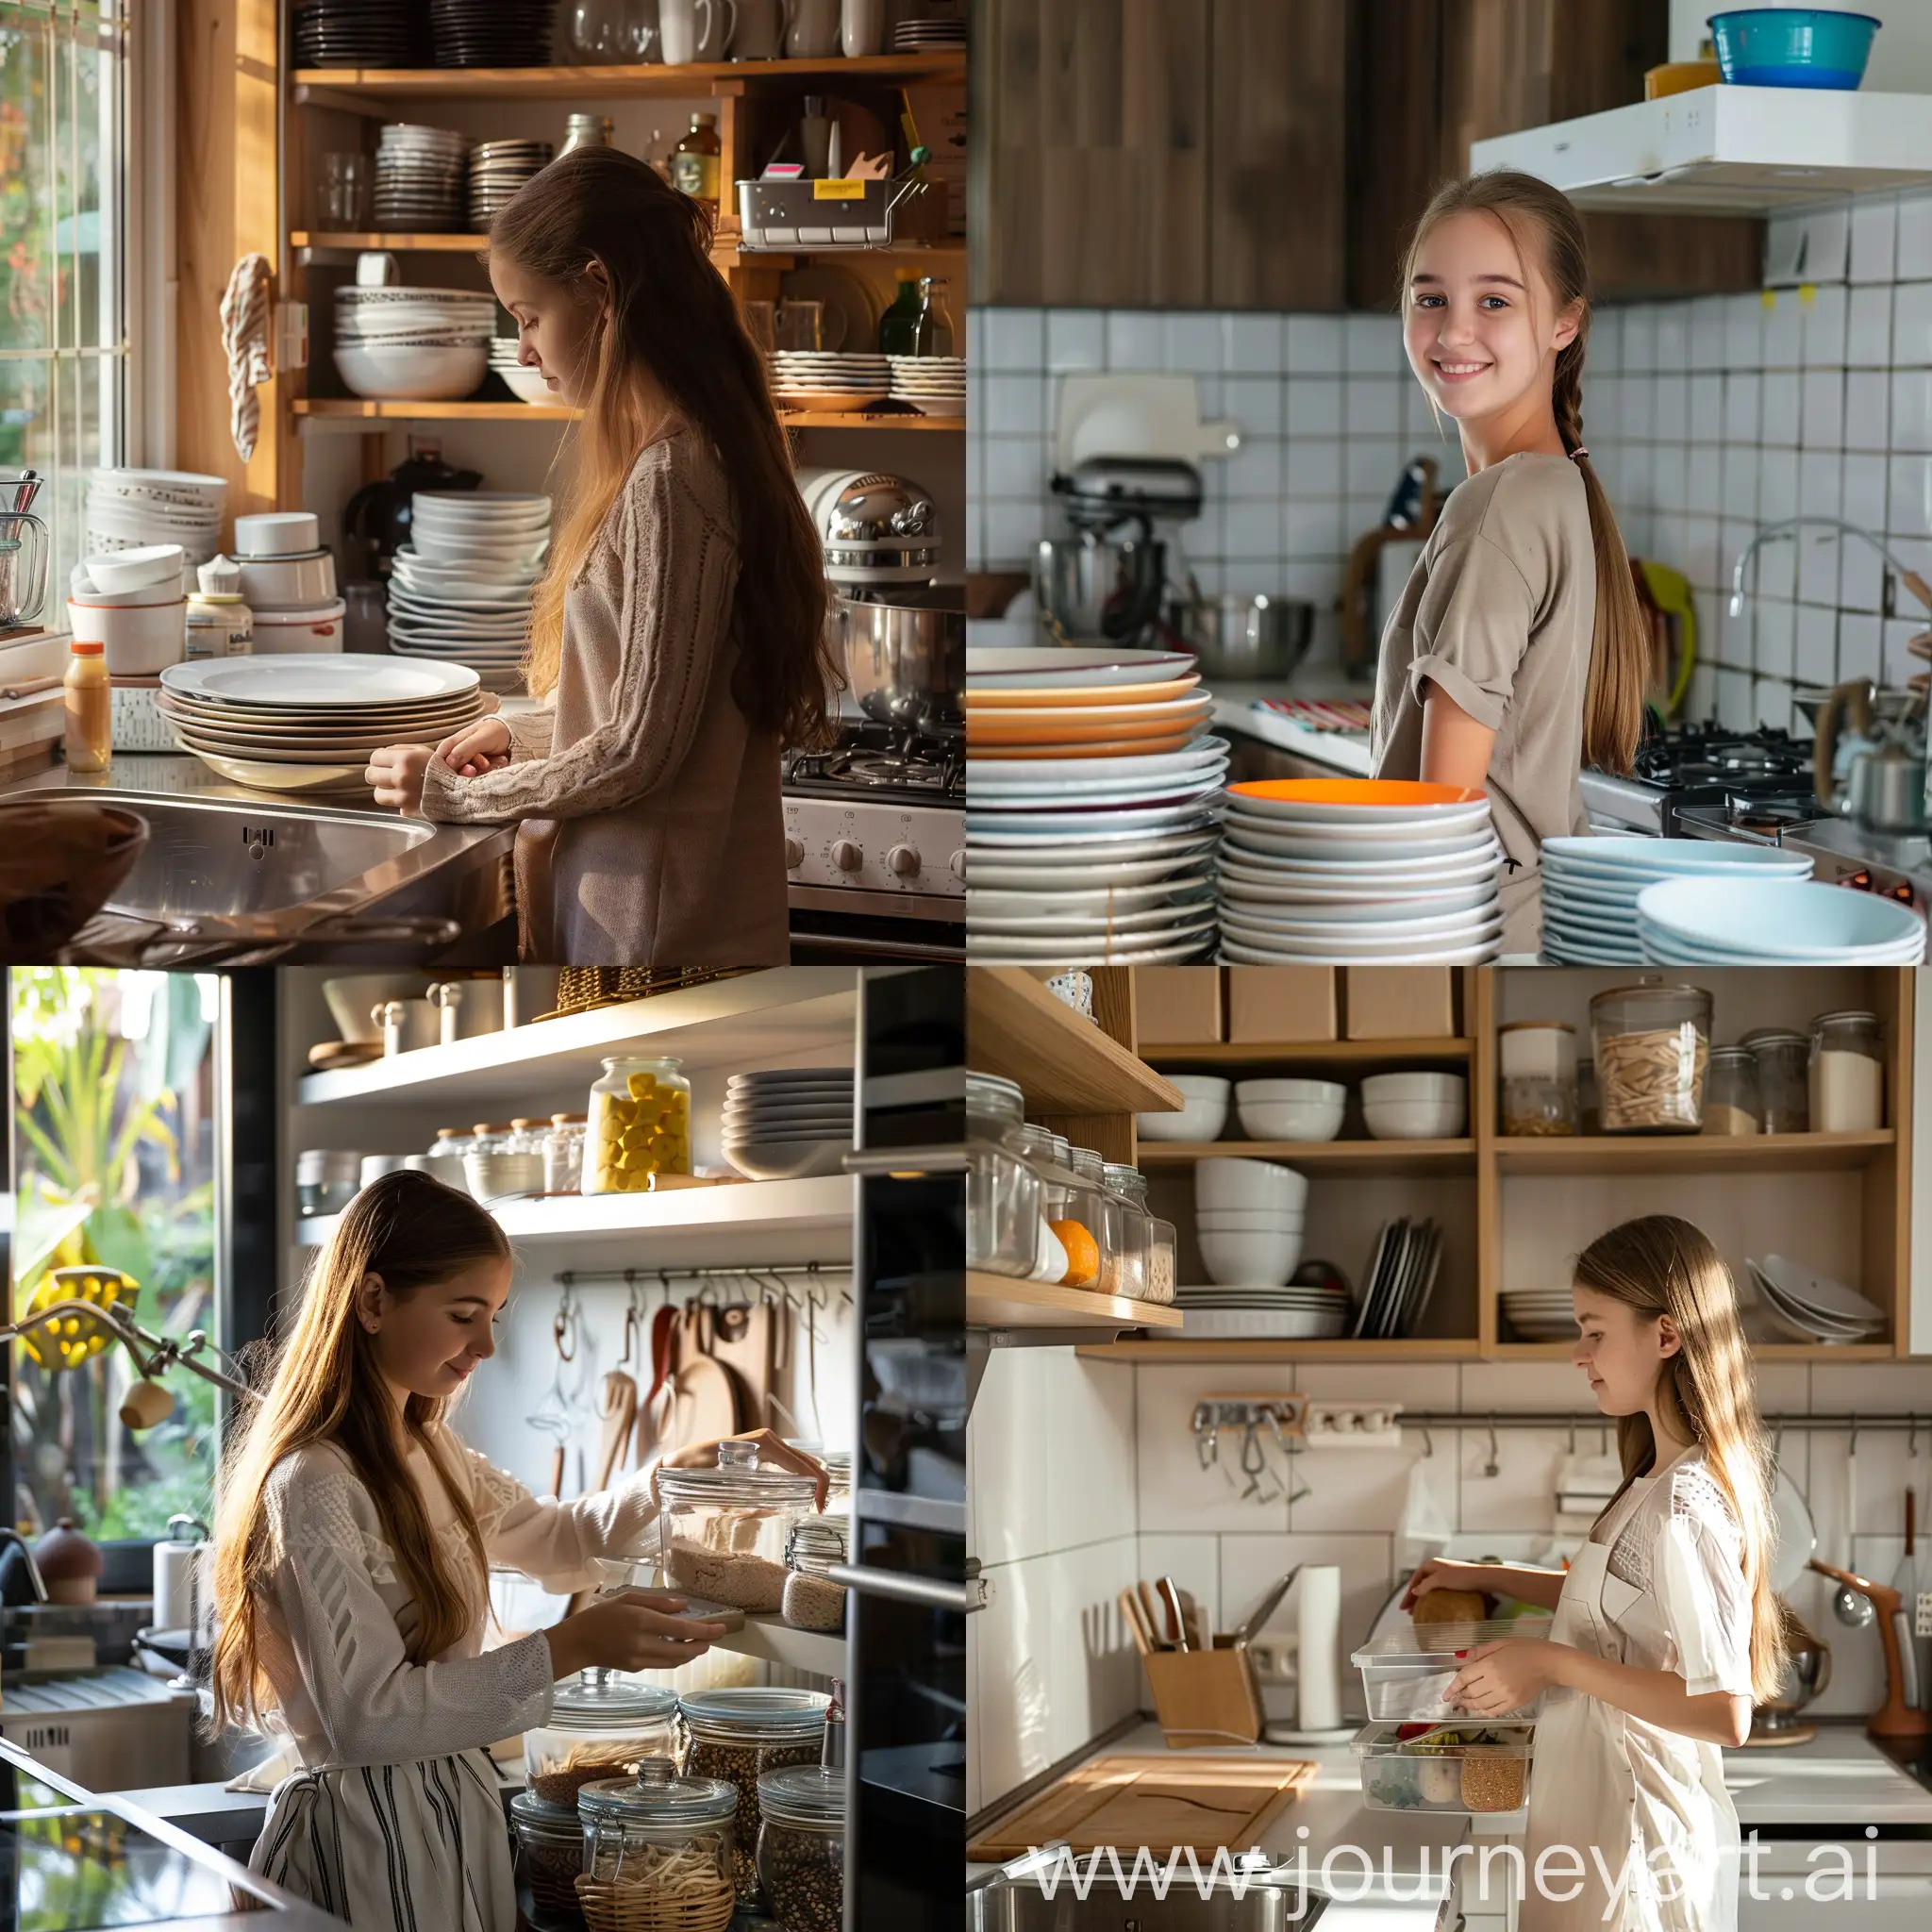 Smart-Teen-Organizing-Family-Kitchen-Domestic-Activity-Scene